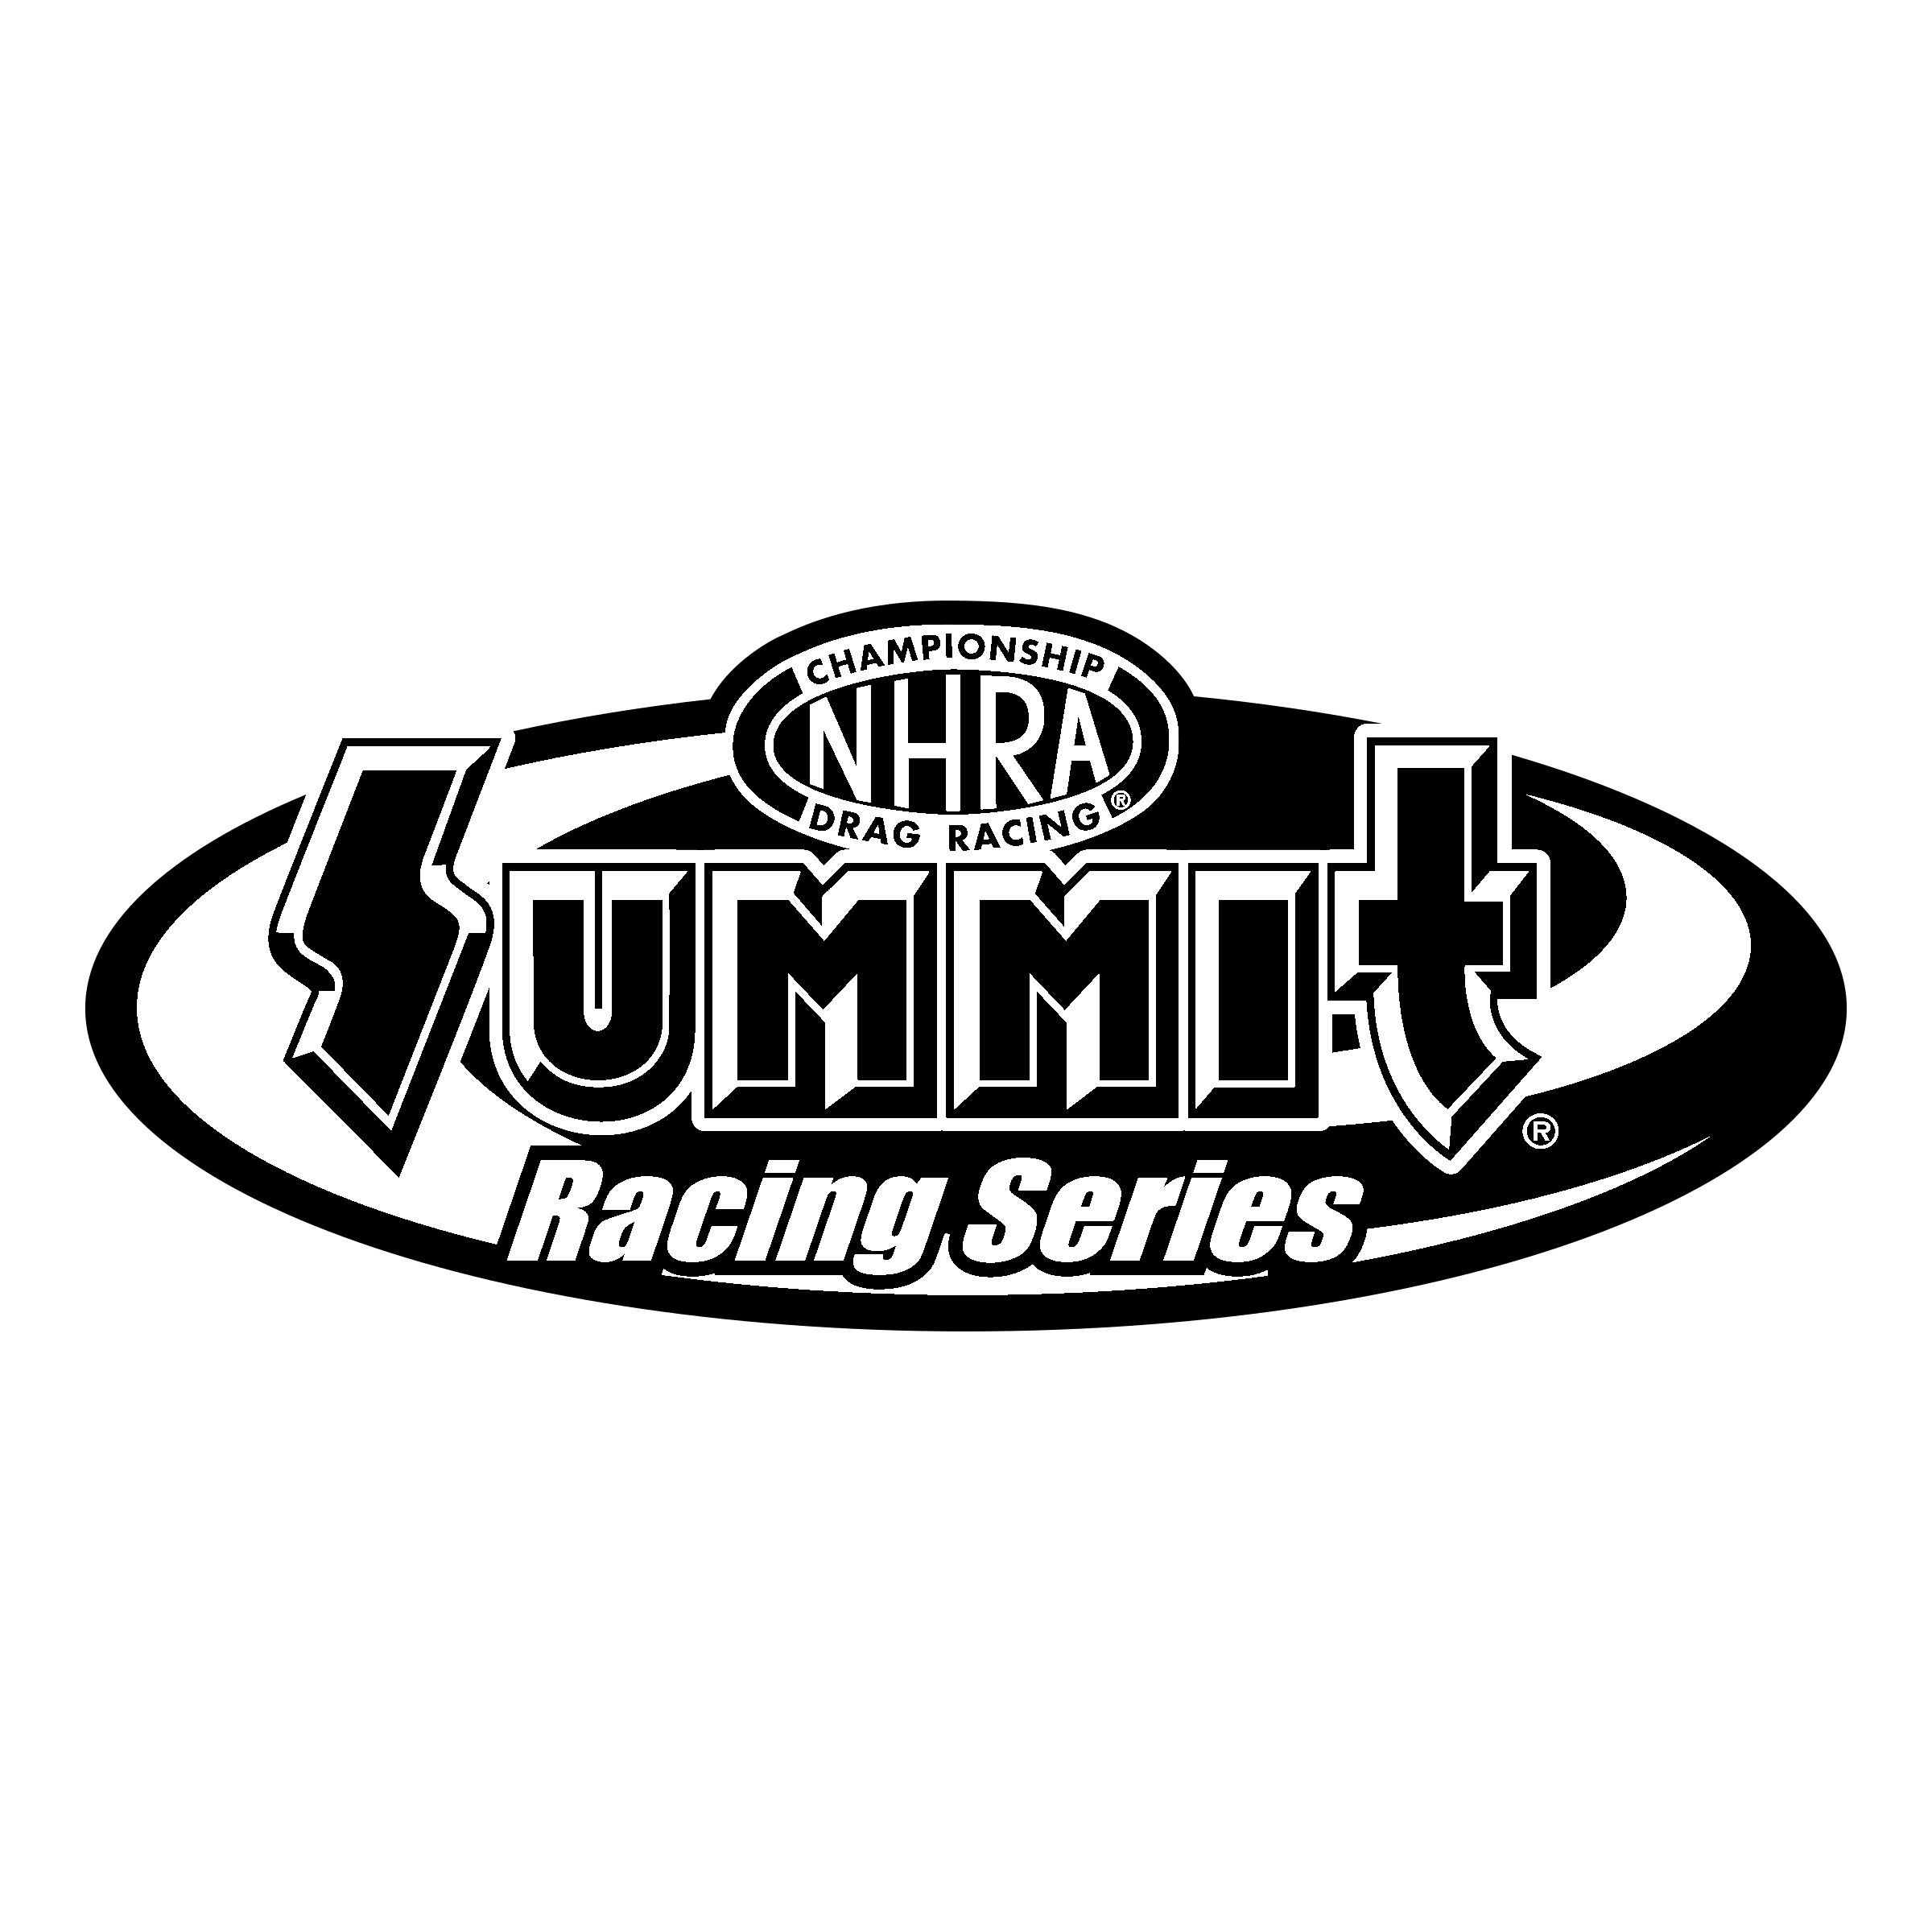 Summit Racing Logo - Summit Racing Series Logo PNG Transparent & SVG Vector